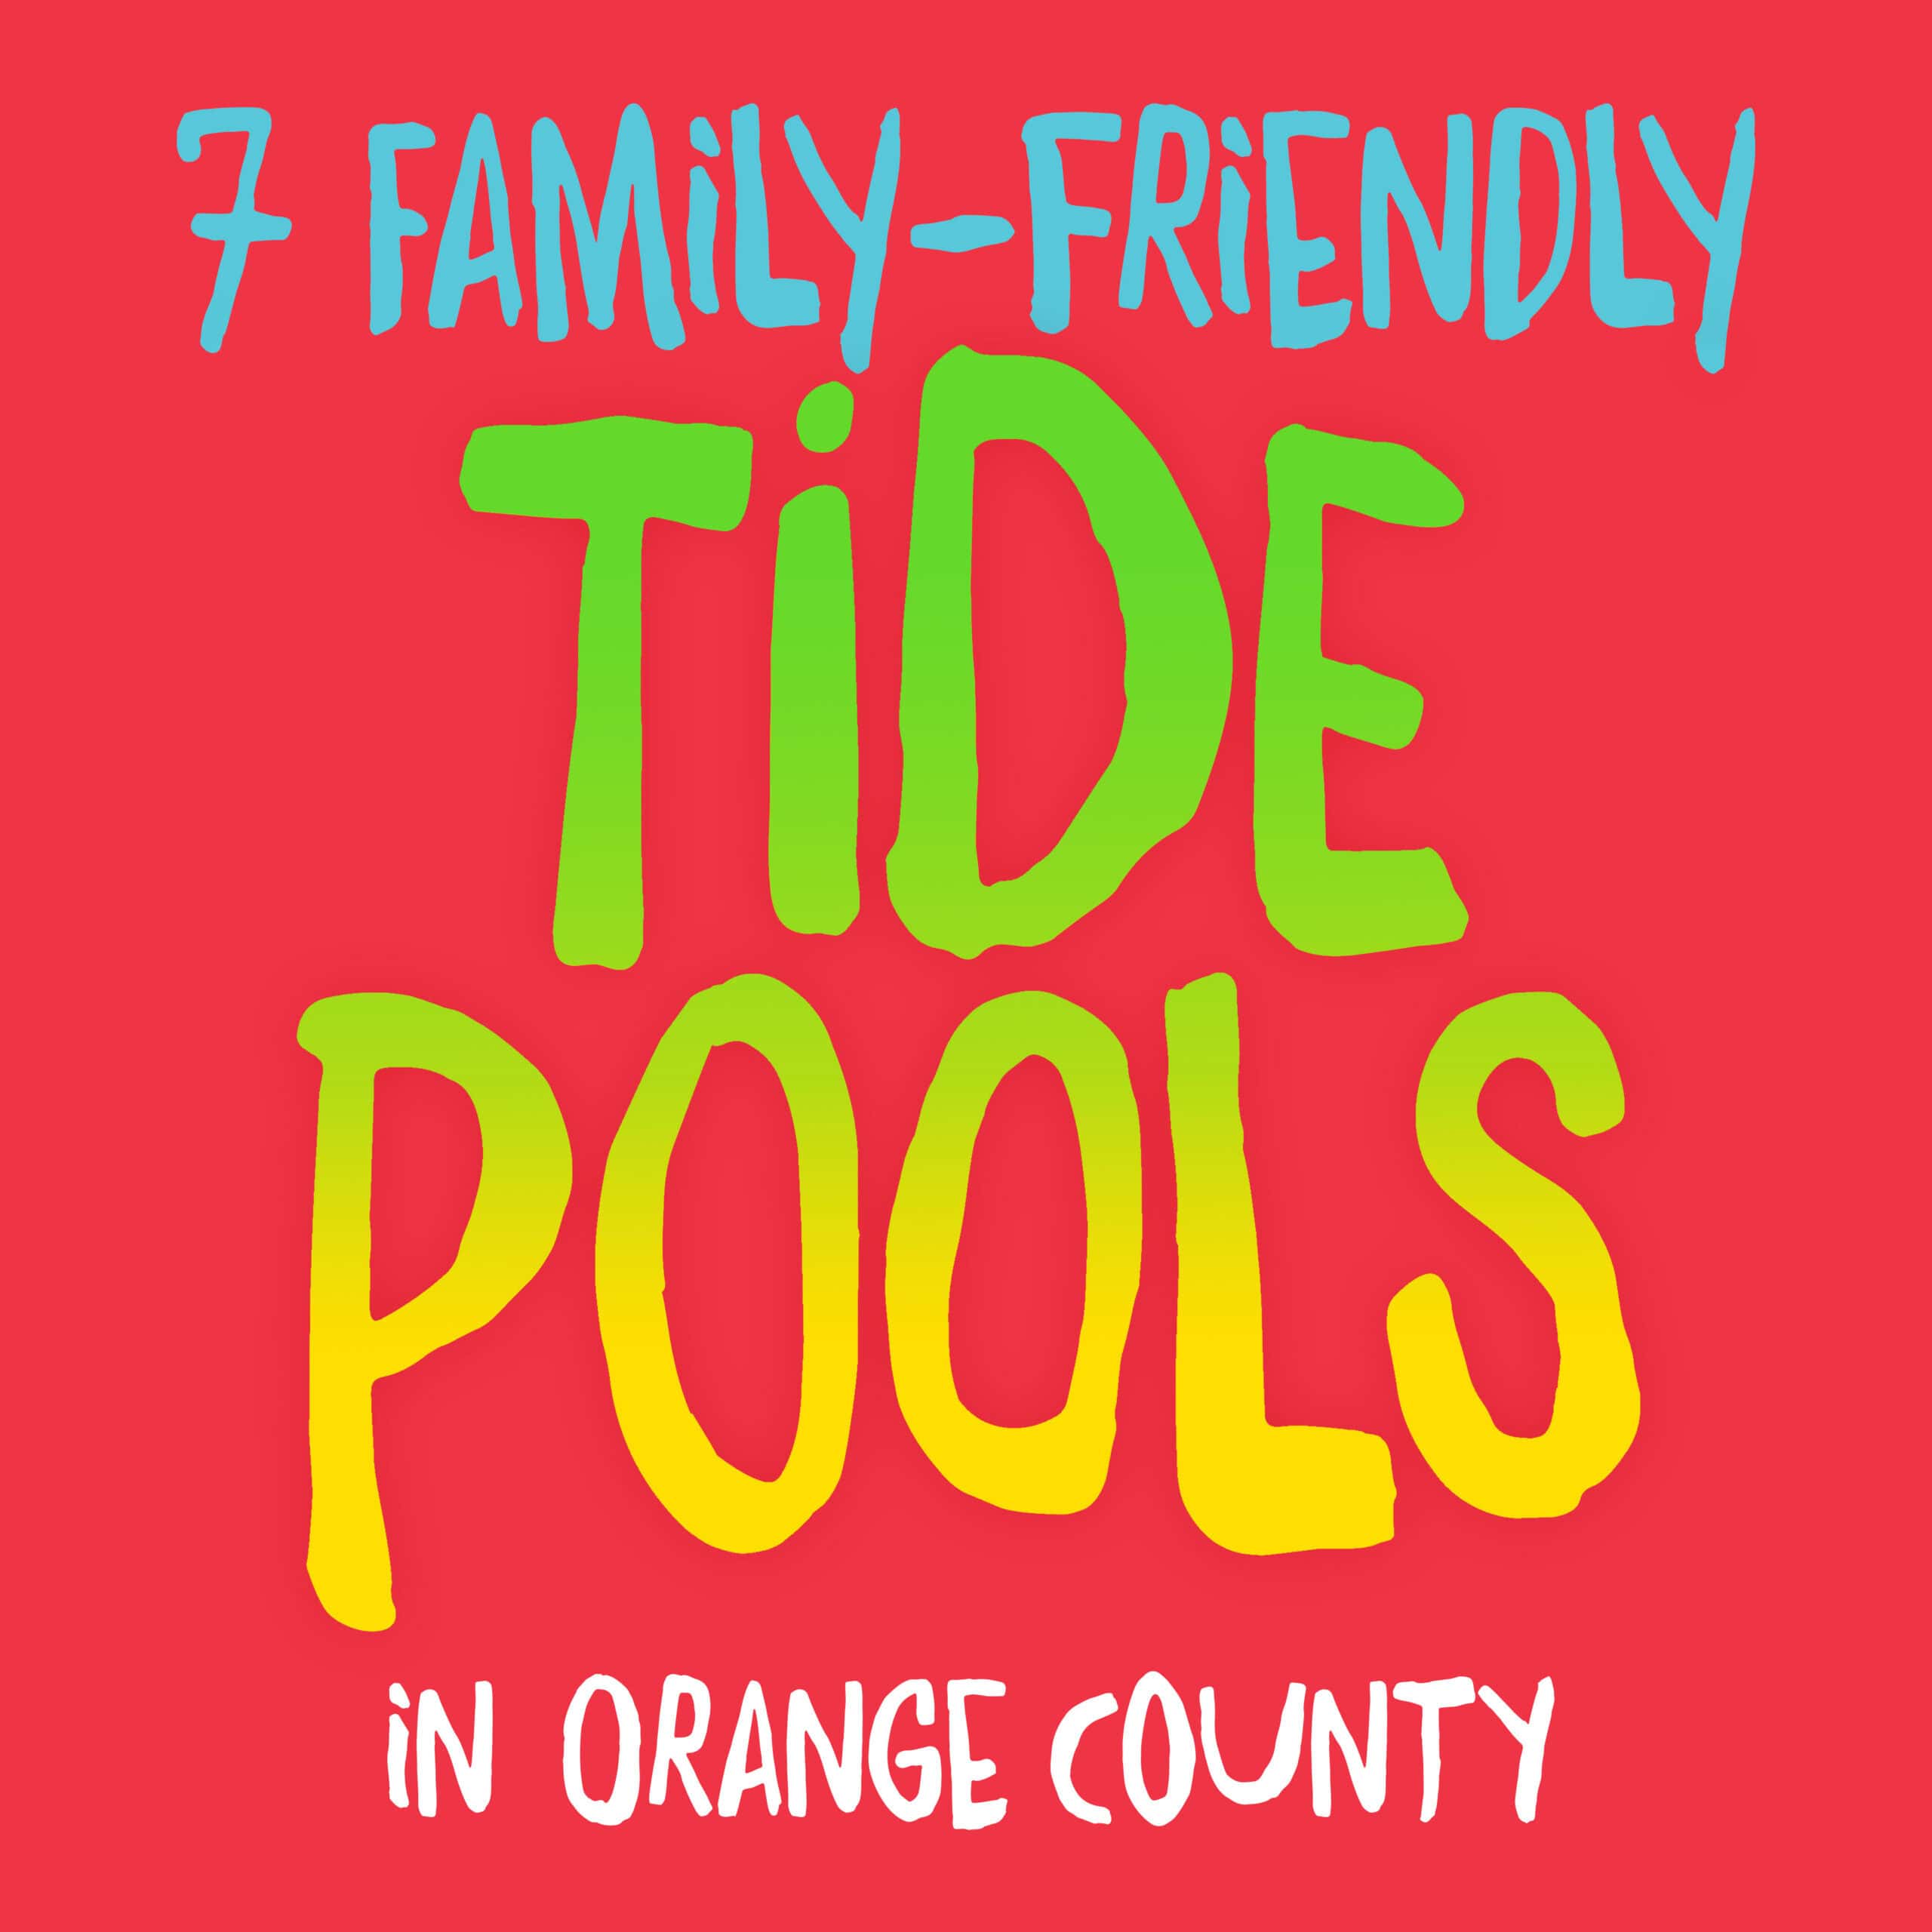 11 Family-Friendly Tide Pools in Orange County